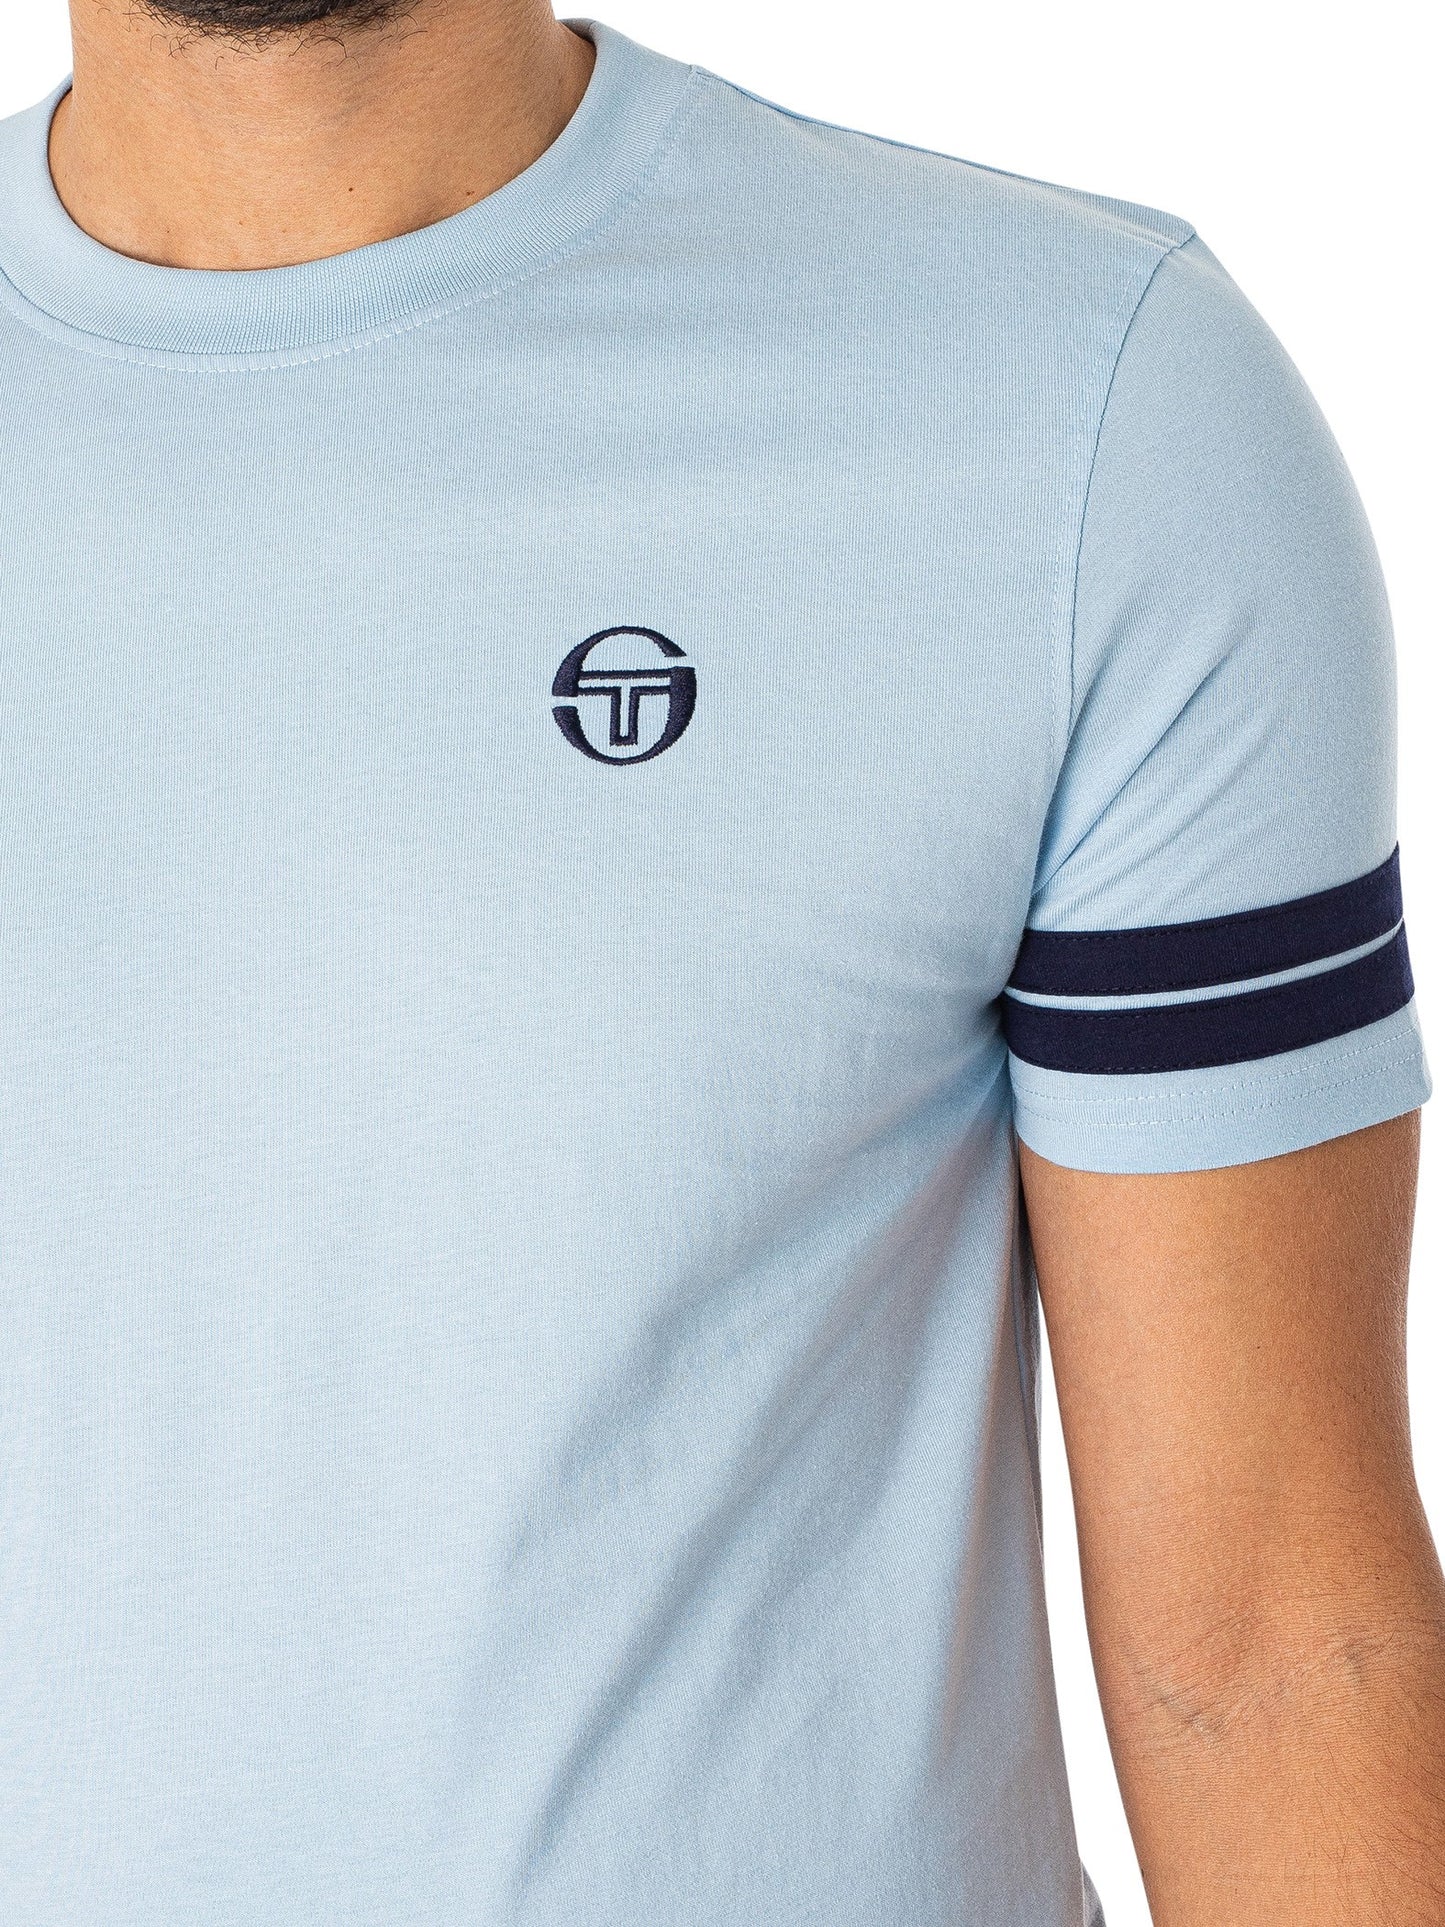 Sergio Tacchini Grello Crew Neck T-shirt | Clear Sky/Maritime Blue - STM18376 - 383